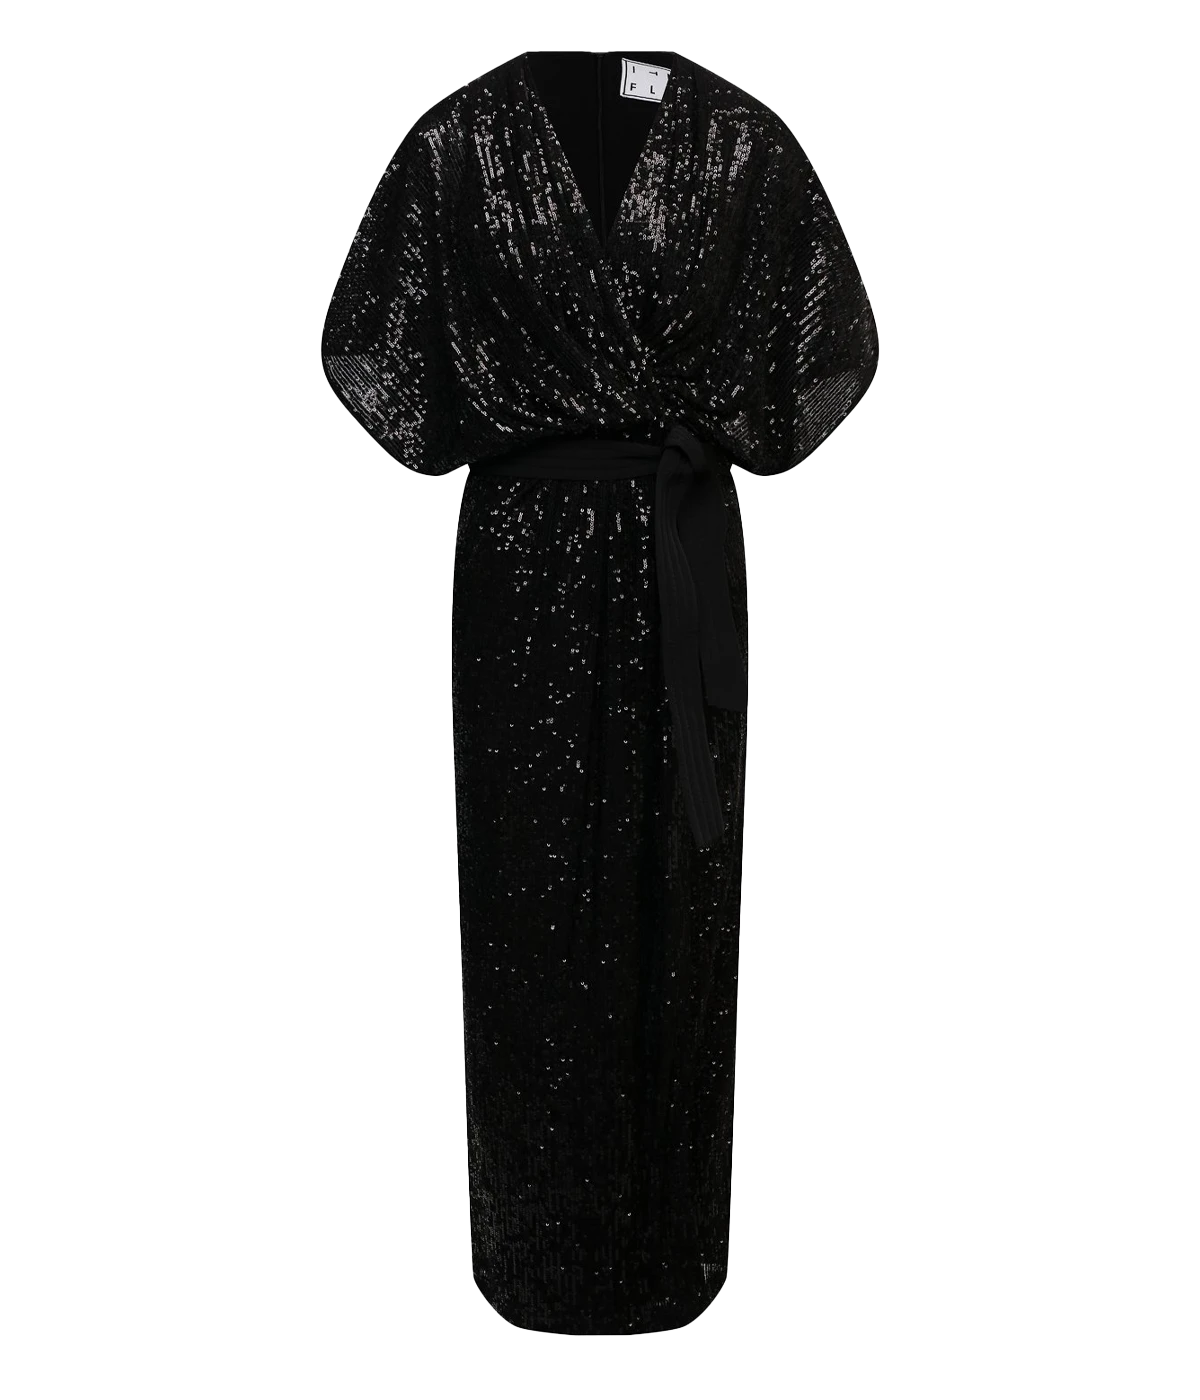 Sequin Madalya Dress in Black